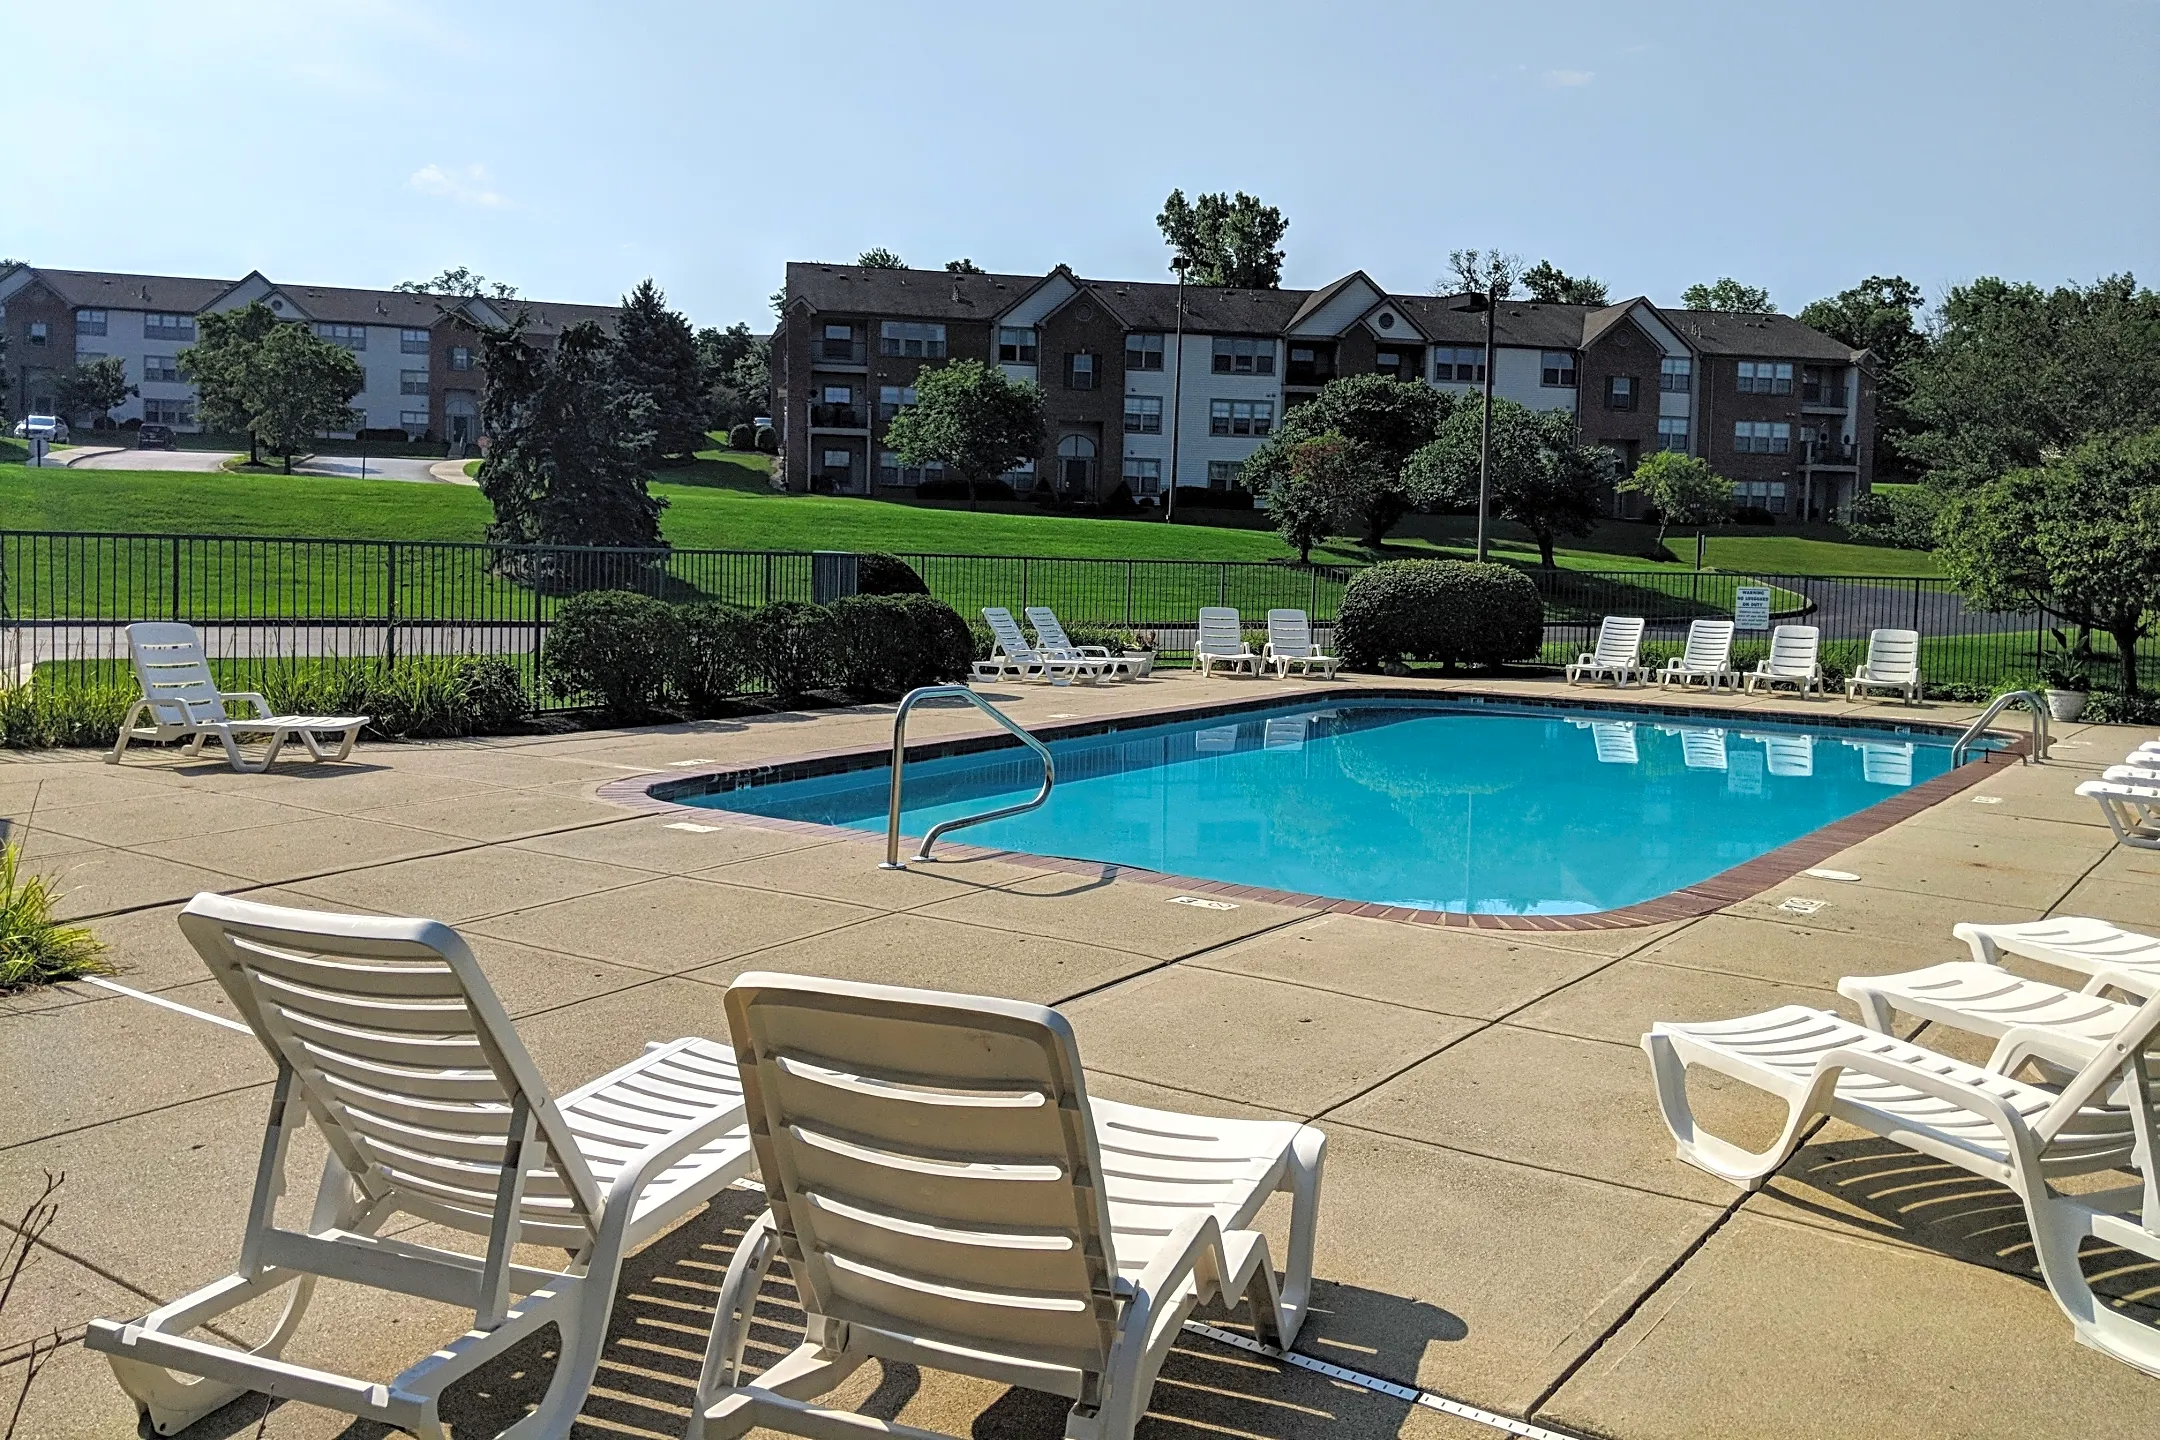 Pool - Union Hill Apartments - Dayton, OH